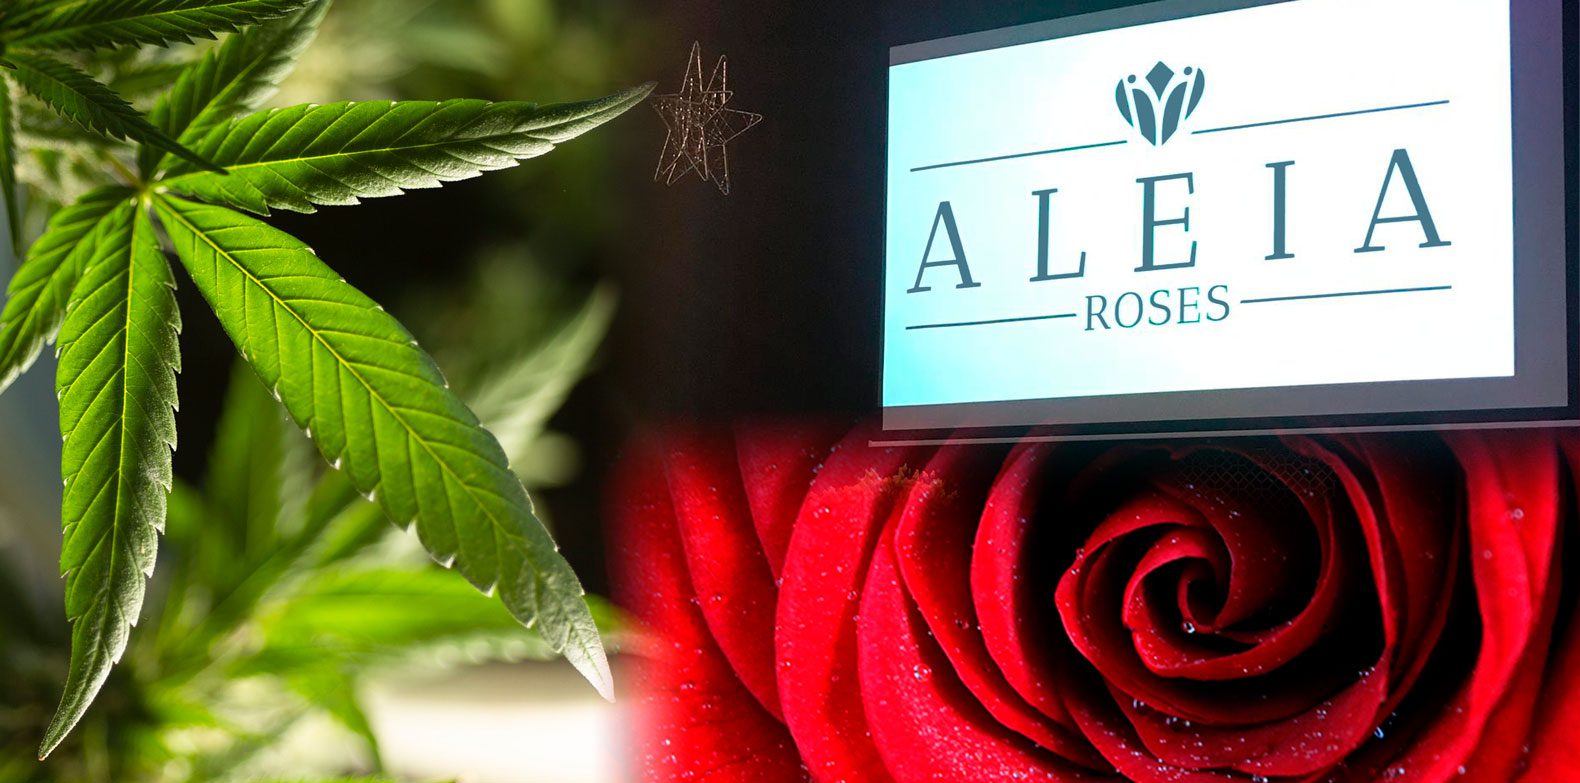 Des roses au cannabis médical